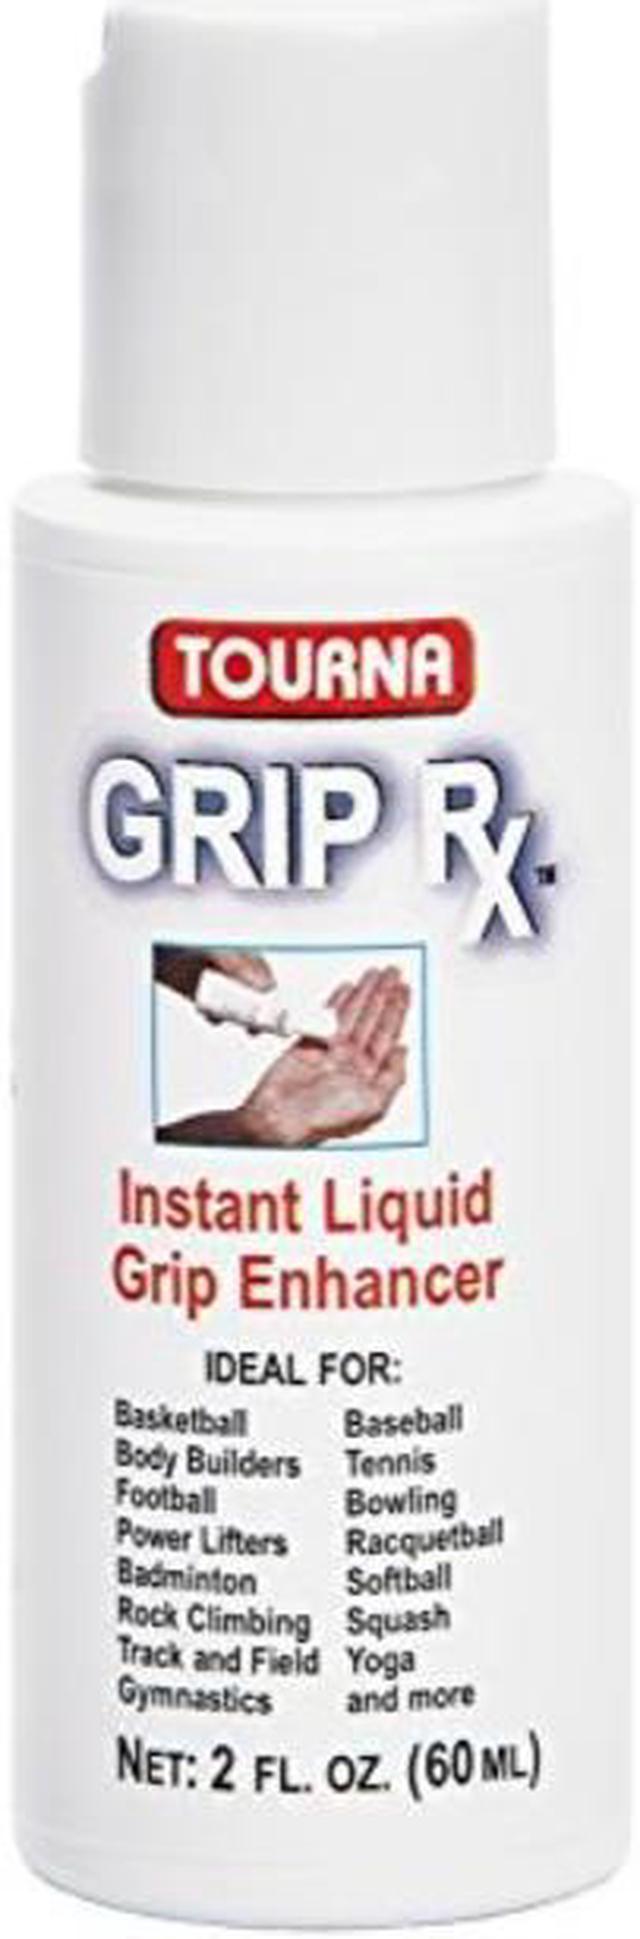 Liquid Grip, Grip Enhancer